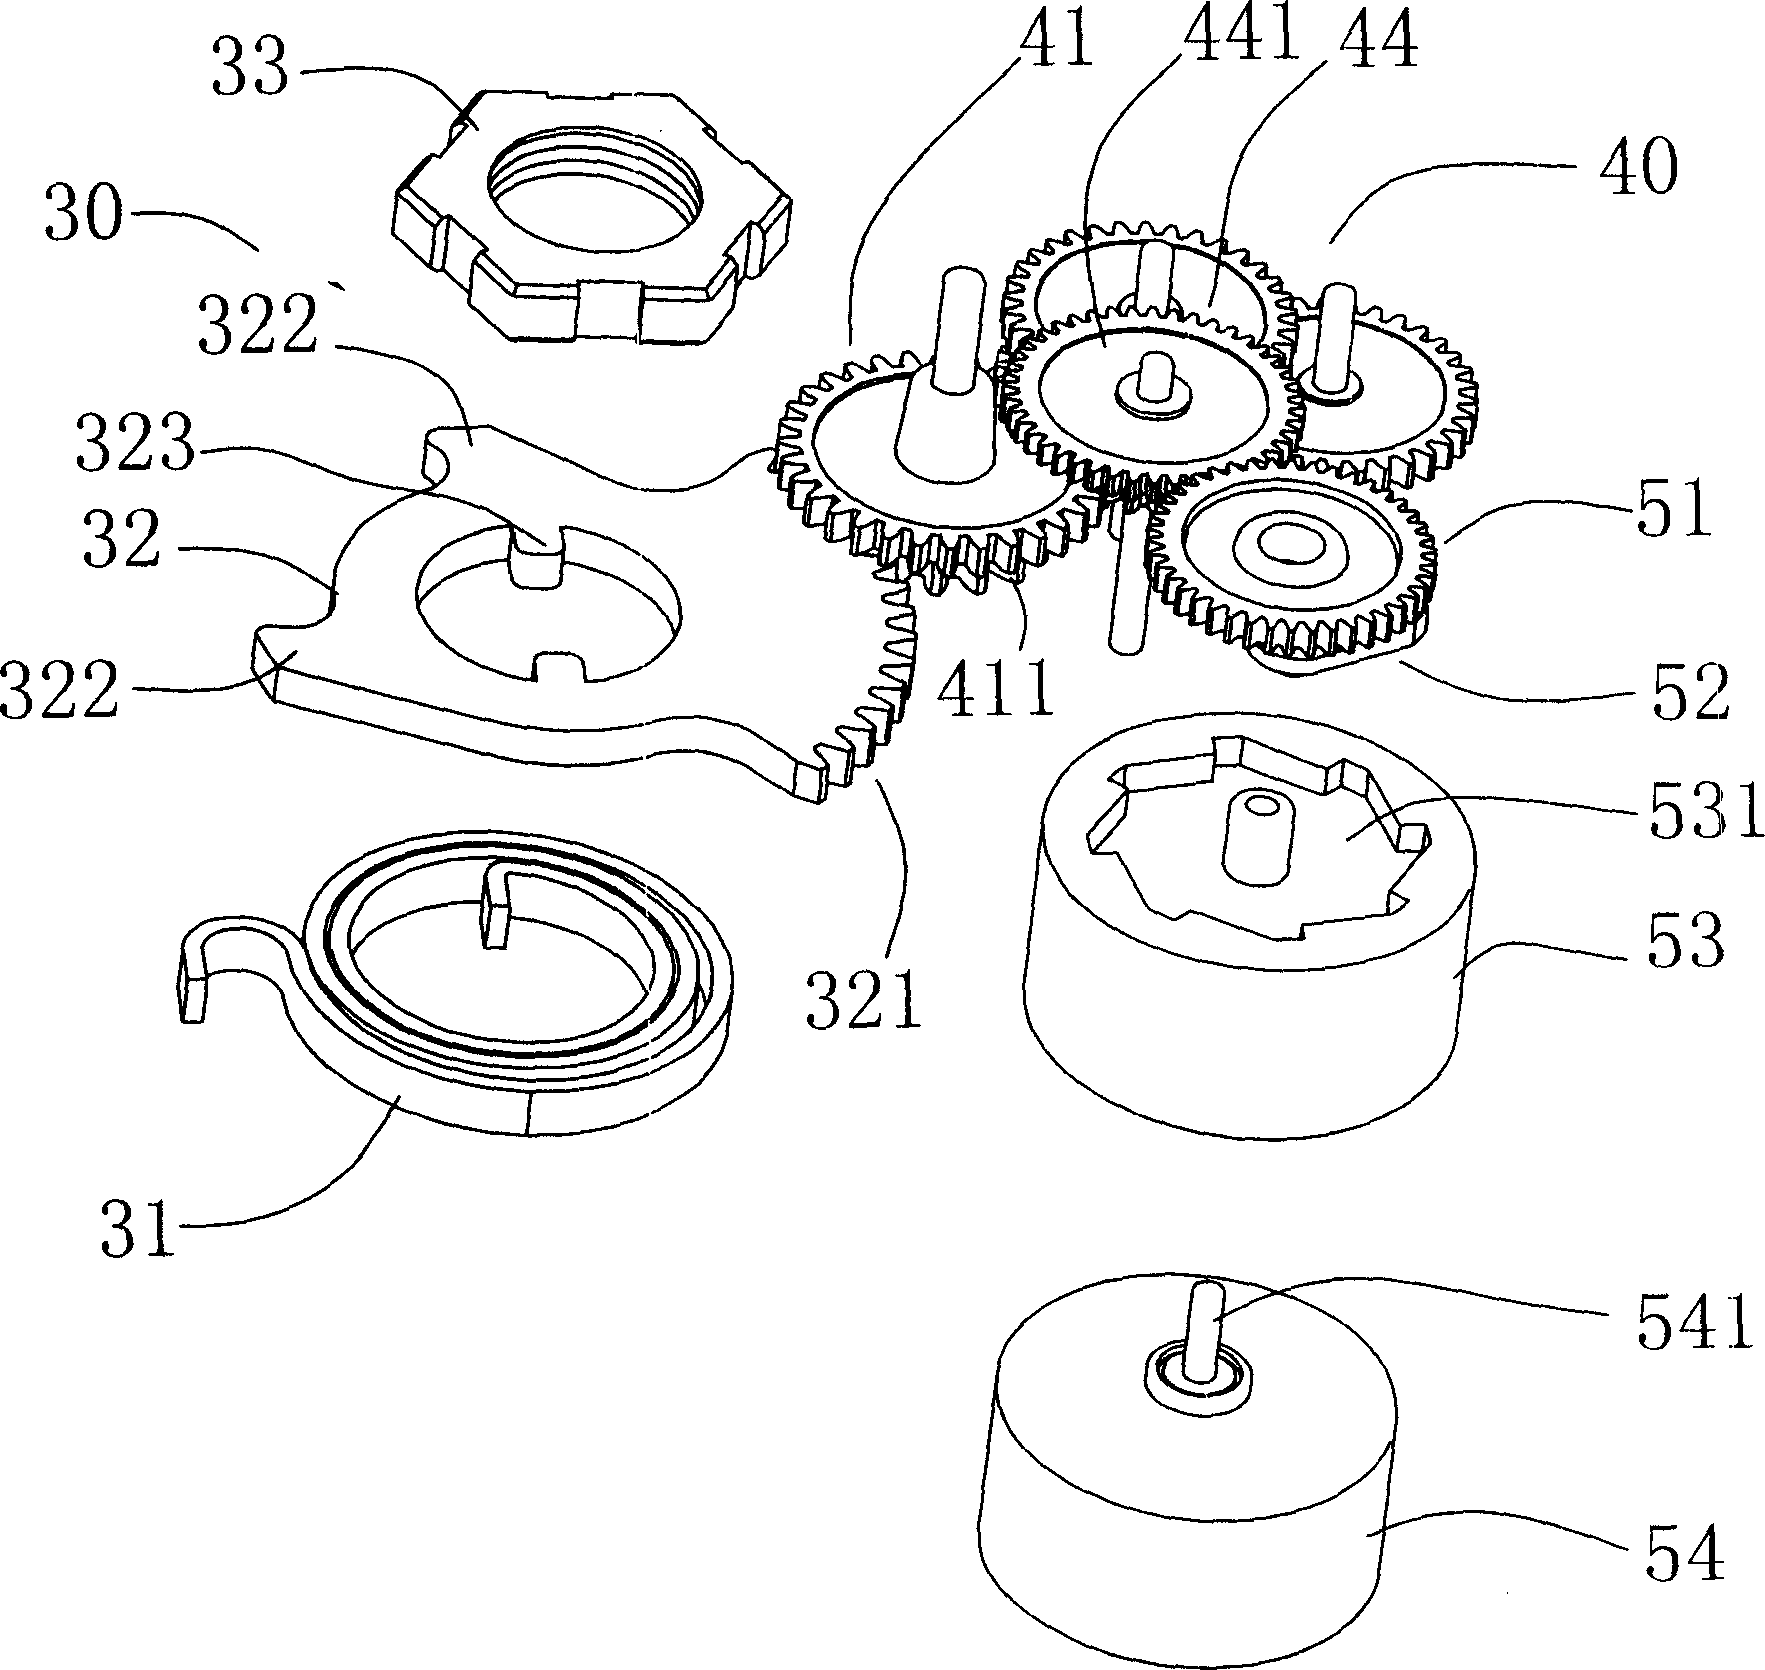 Electronic lock with flywheel self-powering apparatus